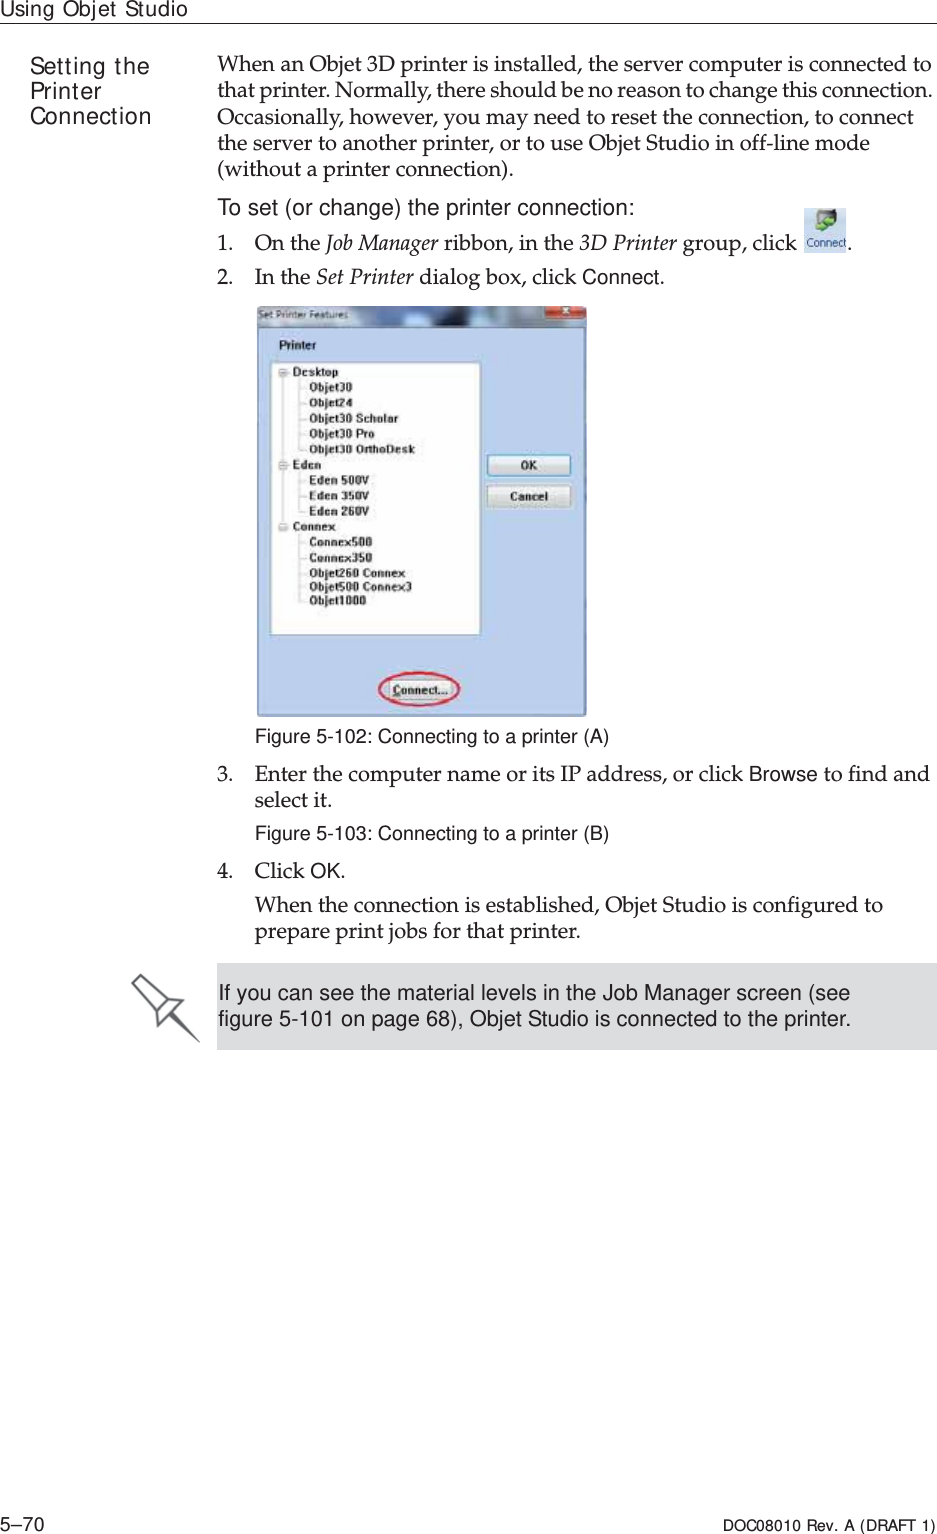 Using Objet Studio5–70 DOC08010 Rev. A (DRAFT 1)Setting the PrinterConnectionWhenȱanȱObjetȱ3Dȱprinterȱisȱinstalled,ȱtheȱserverȱcomputerȱisȱconnectedȱtoȱthatȱprinter.ȱNormally,ȱthereȱshouldȱbeȱnoȱreasonȱtoȱchangeȱthisȱconnection.ȱOccasionally,ȱhowever,ȱyouȱmayȱneedȱtoȱresetȱtheȱconnection,ȱtoȱconnectȱtheȱserverȱtoȱanotherȱprinter,ȱorȱtoȱuseȱObjetȱStudioȱinȱoffȬlineȱmodeȱ(withoutȱaȱprinterȱconnection).To set (or change) the printer connection:1. OnȱtheȱJobȱManagerȱribbon,ȱinȱtheȱ3DȱPrinterȱgroup,ȱclickȱ.2. InȱtheȱSetȱPrinterȱdialogȱbox,ȱclickȱConnect.Figure 5-102: Connecting to a printer (A)3. EnterȱtheȱcomputerȱnameȱorȱitsȱIPȱaddress,ȱorȱclickȱBrowseȱtoȱfindȱandȱselectȱit.Figure 5-103: Connecting to a printer (B)4. ClickȱOK.Whenȱtheȱconnectionȱisȱestablished,ȱObjetȱStudioȱisȱconfiguredȱtoȱprepareȱprintȱjobsȱforȱthatȱprinter.If you can see the material levels in the Job Manager screen (see figure 5-101 on page 68), Objet Studio is connected to the printer.